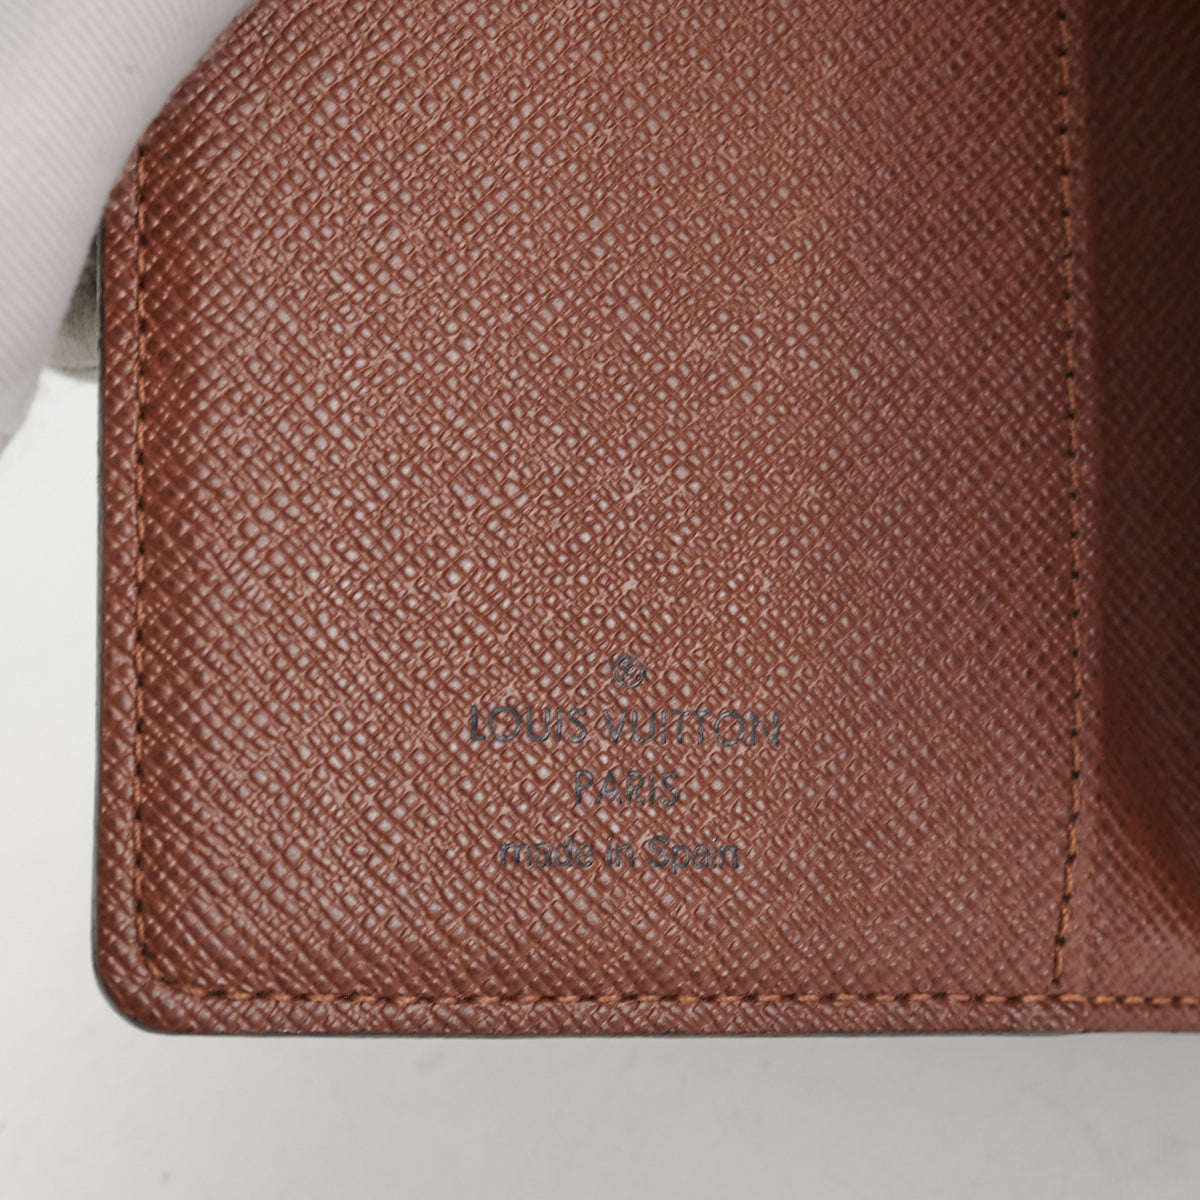 Louis Vuitton Agenda PM Monogram Wallet Limited Edition - THE PURSE AFFAIR